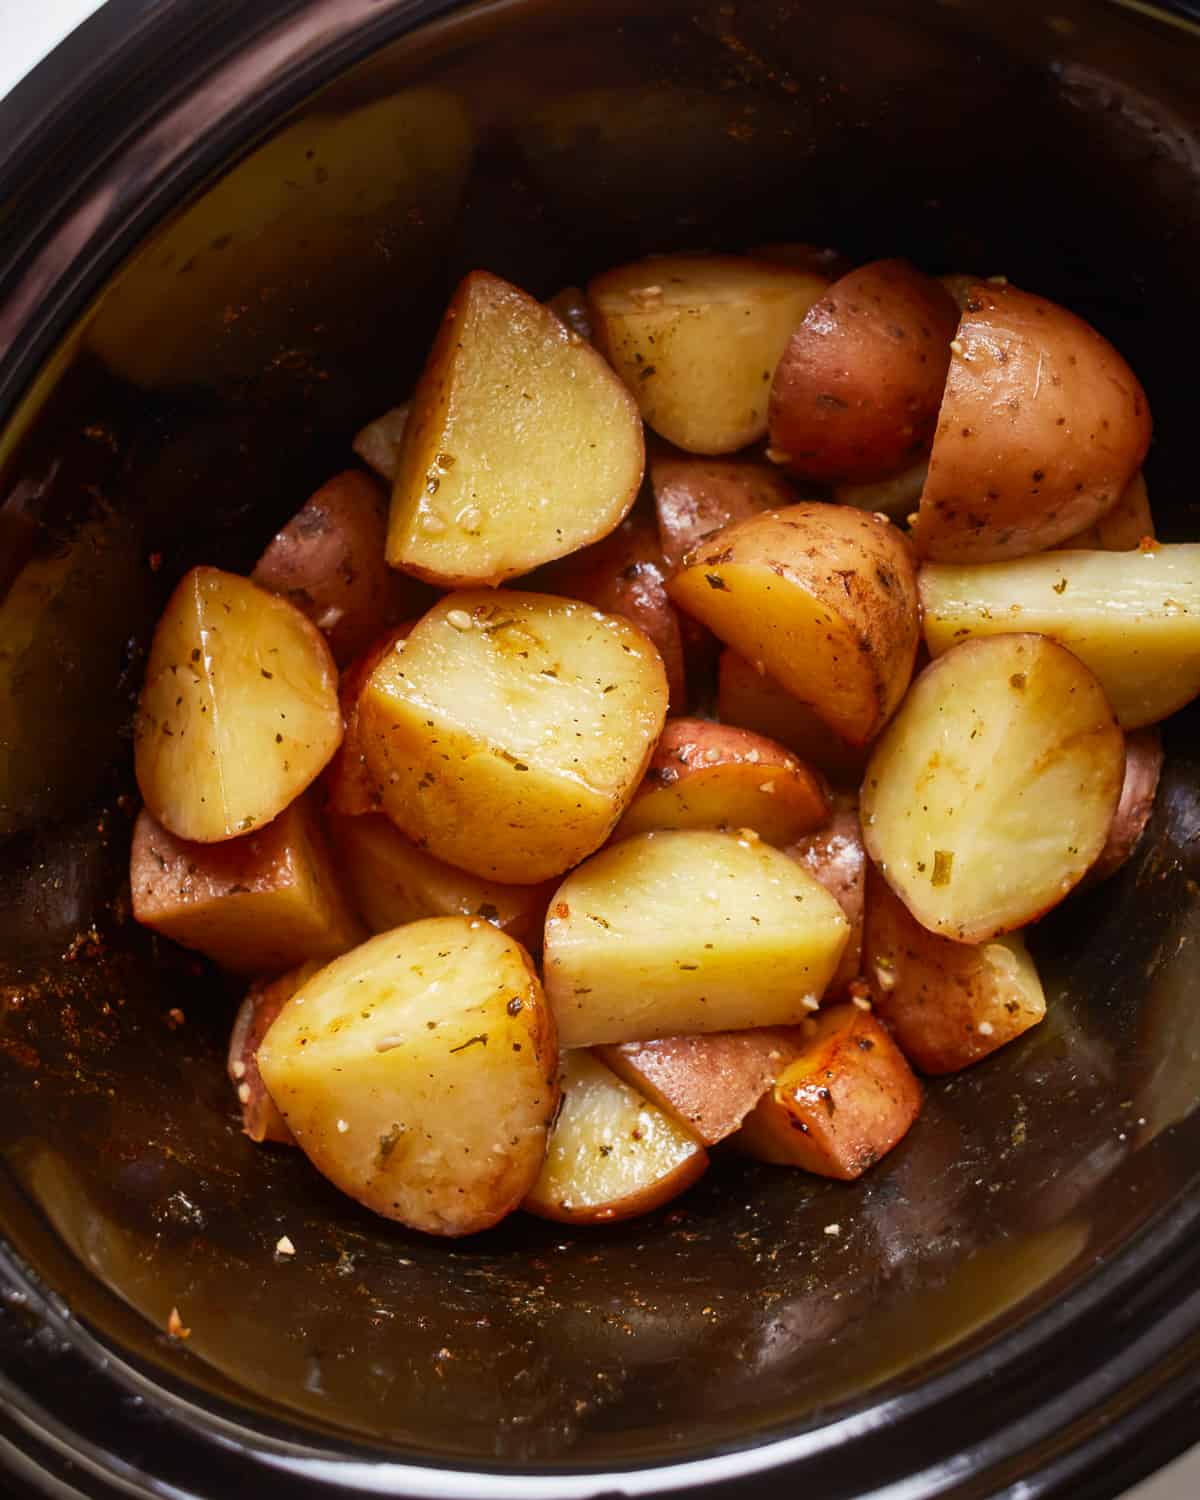 https://www.thecookierookie.com/wp-content/uploads/2018/03/crockpot-potatoes-recipe-3.jpg